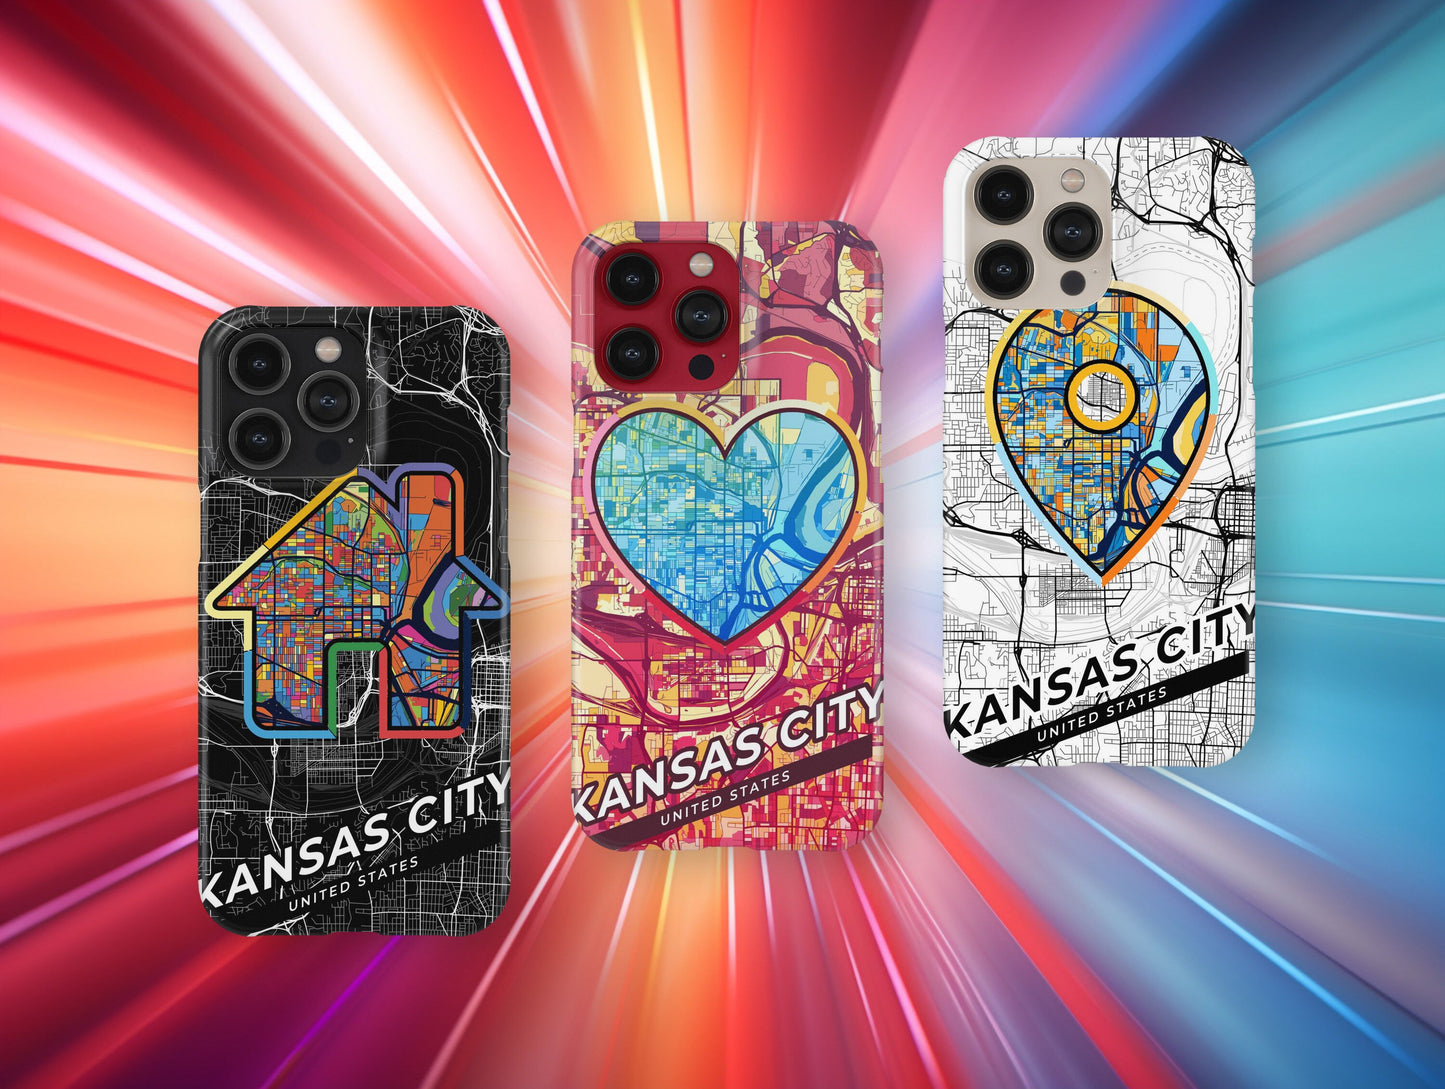 Kansas City Kansas slim phone case with colorful icon. Birthday, wedding or housewarming gift. Couple match cases.